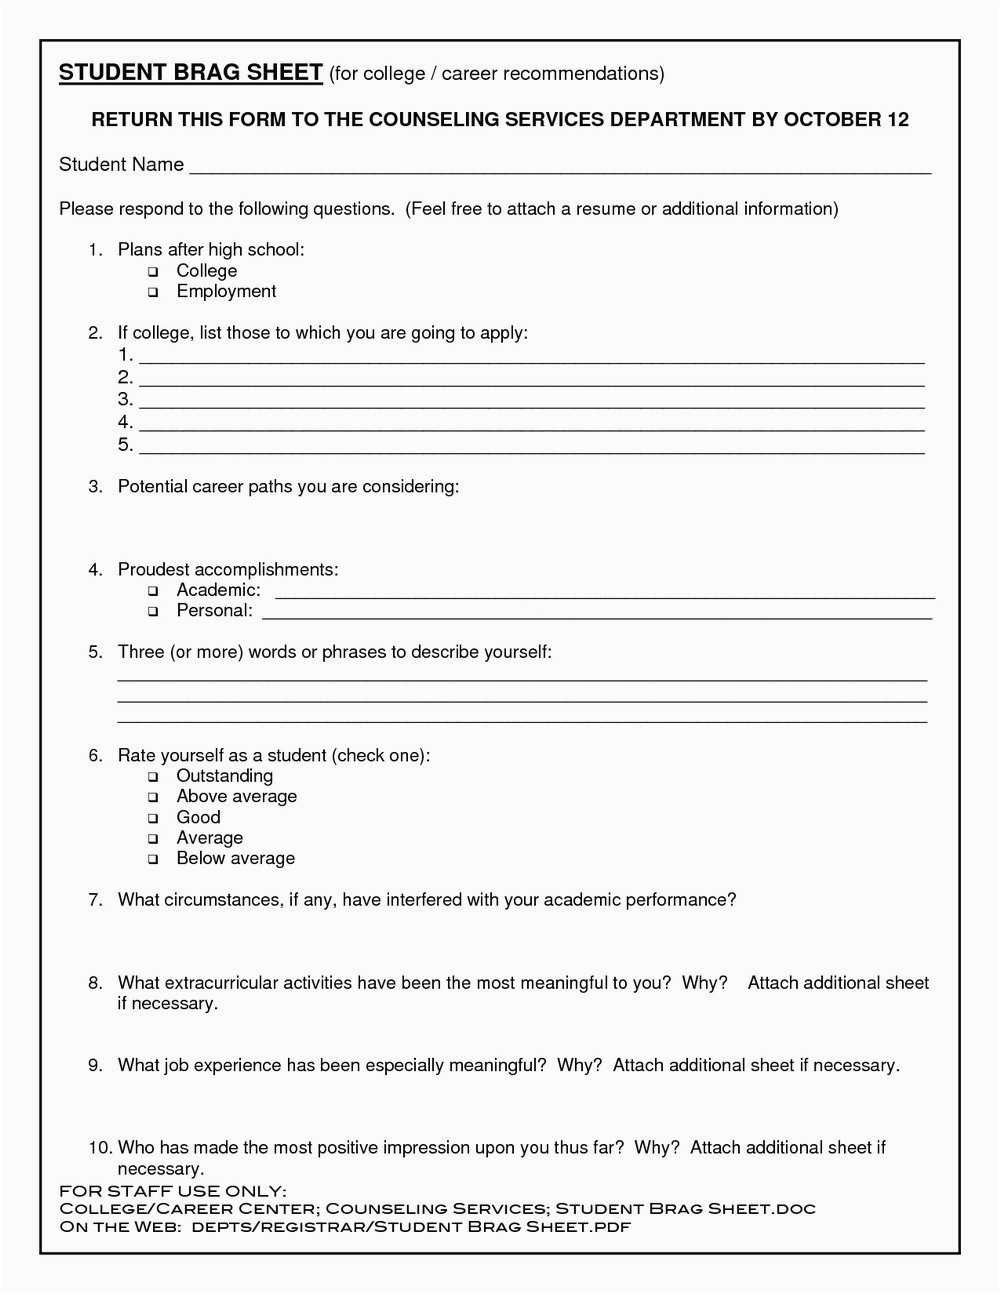 Sample Resume Fill In the Blank 12 Printable Resume Template Radaircars